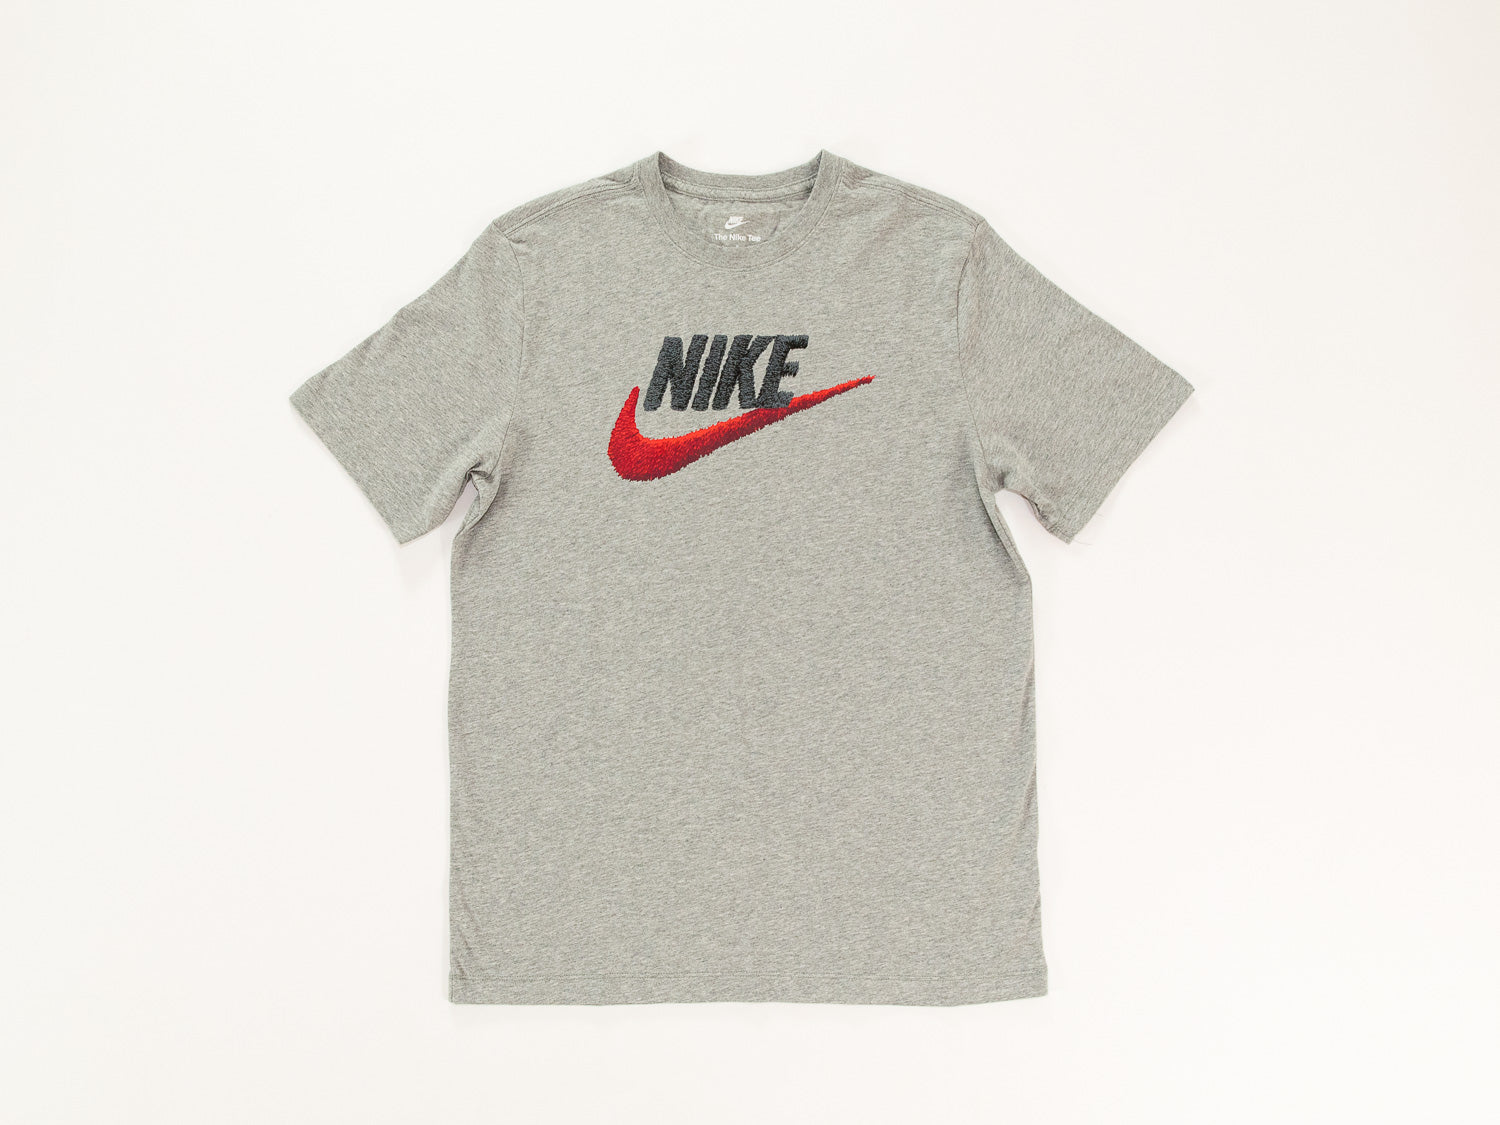 Nike Brand Mark T Shirt 'Grey' Unheardof Brand